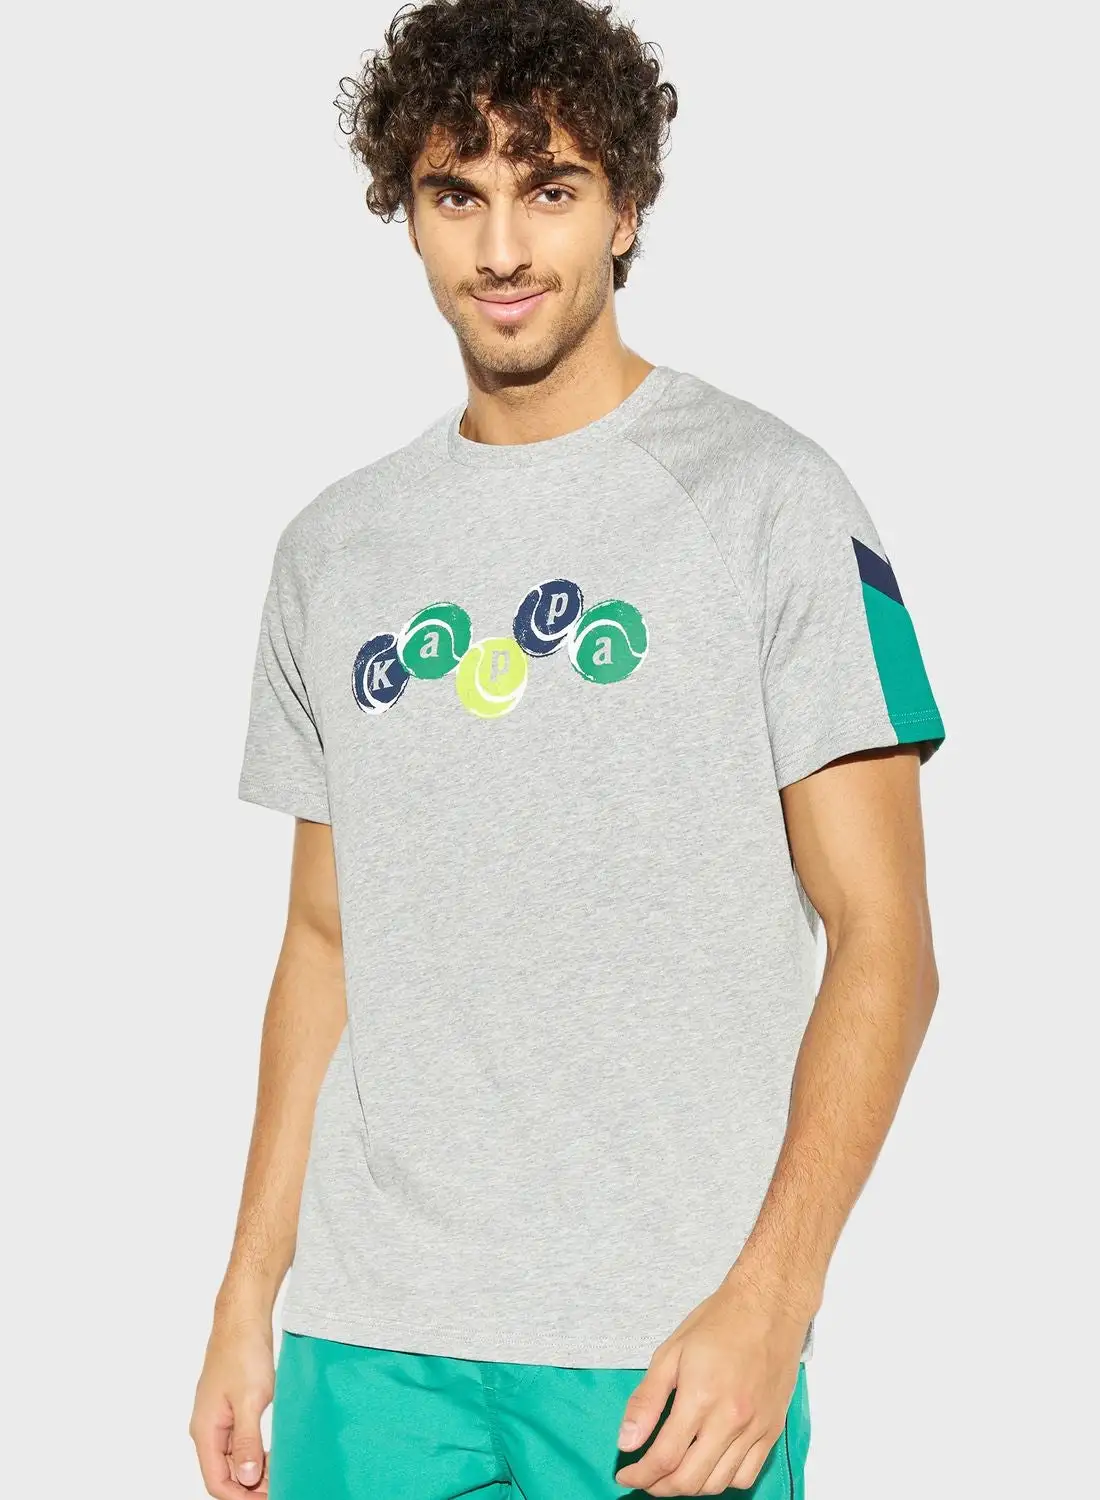 Kappa Graphic Print T-Shirt